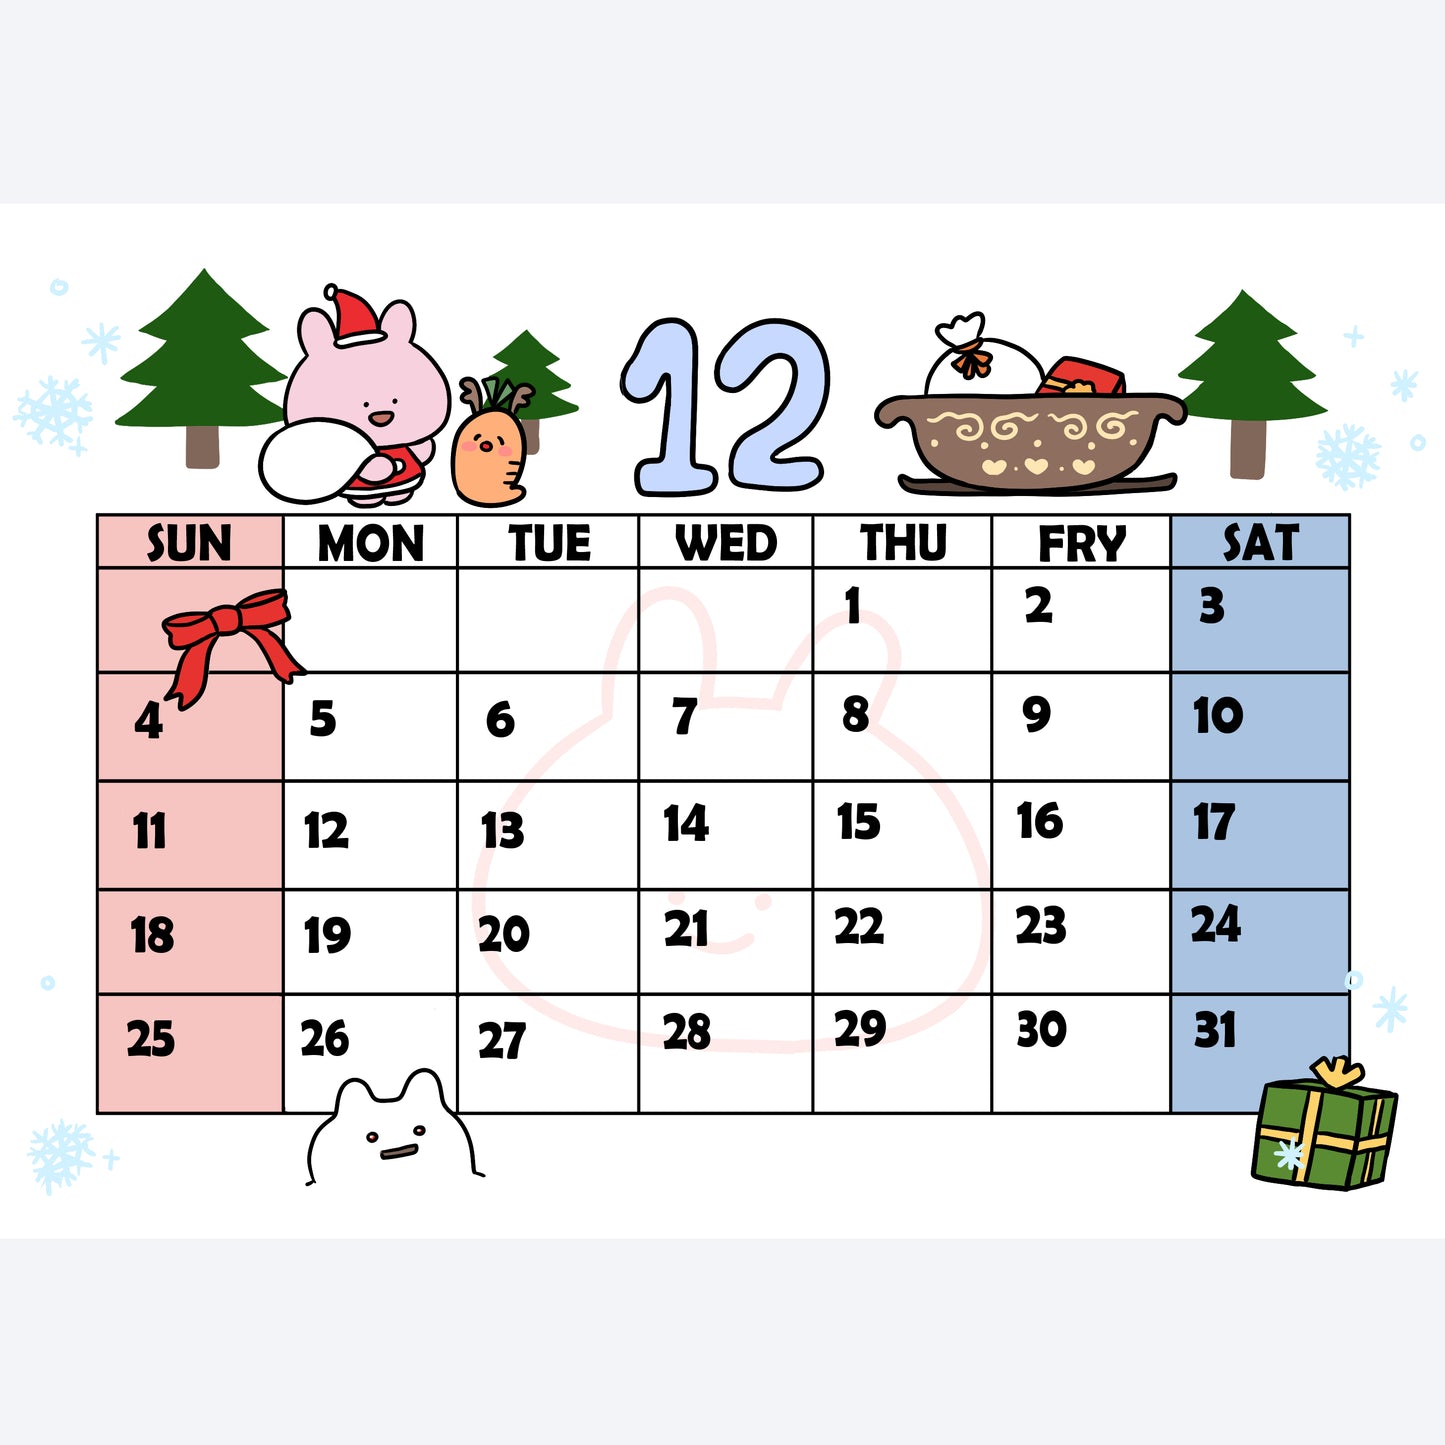 [Made-to-order] Asamimi-chan desktop calendar